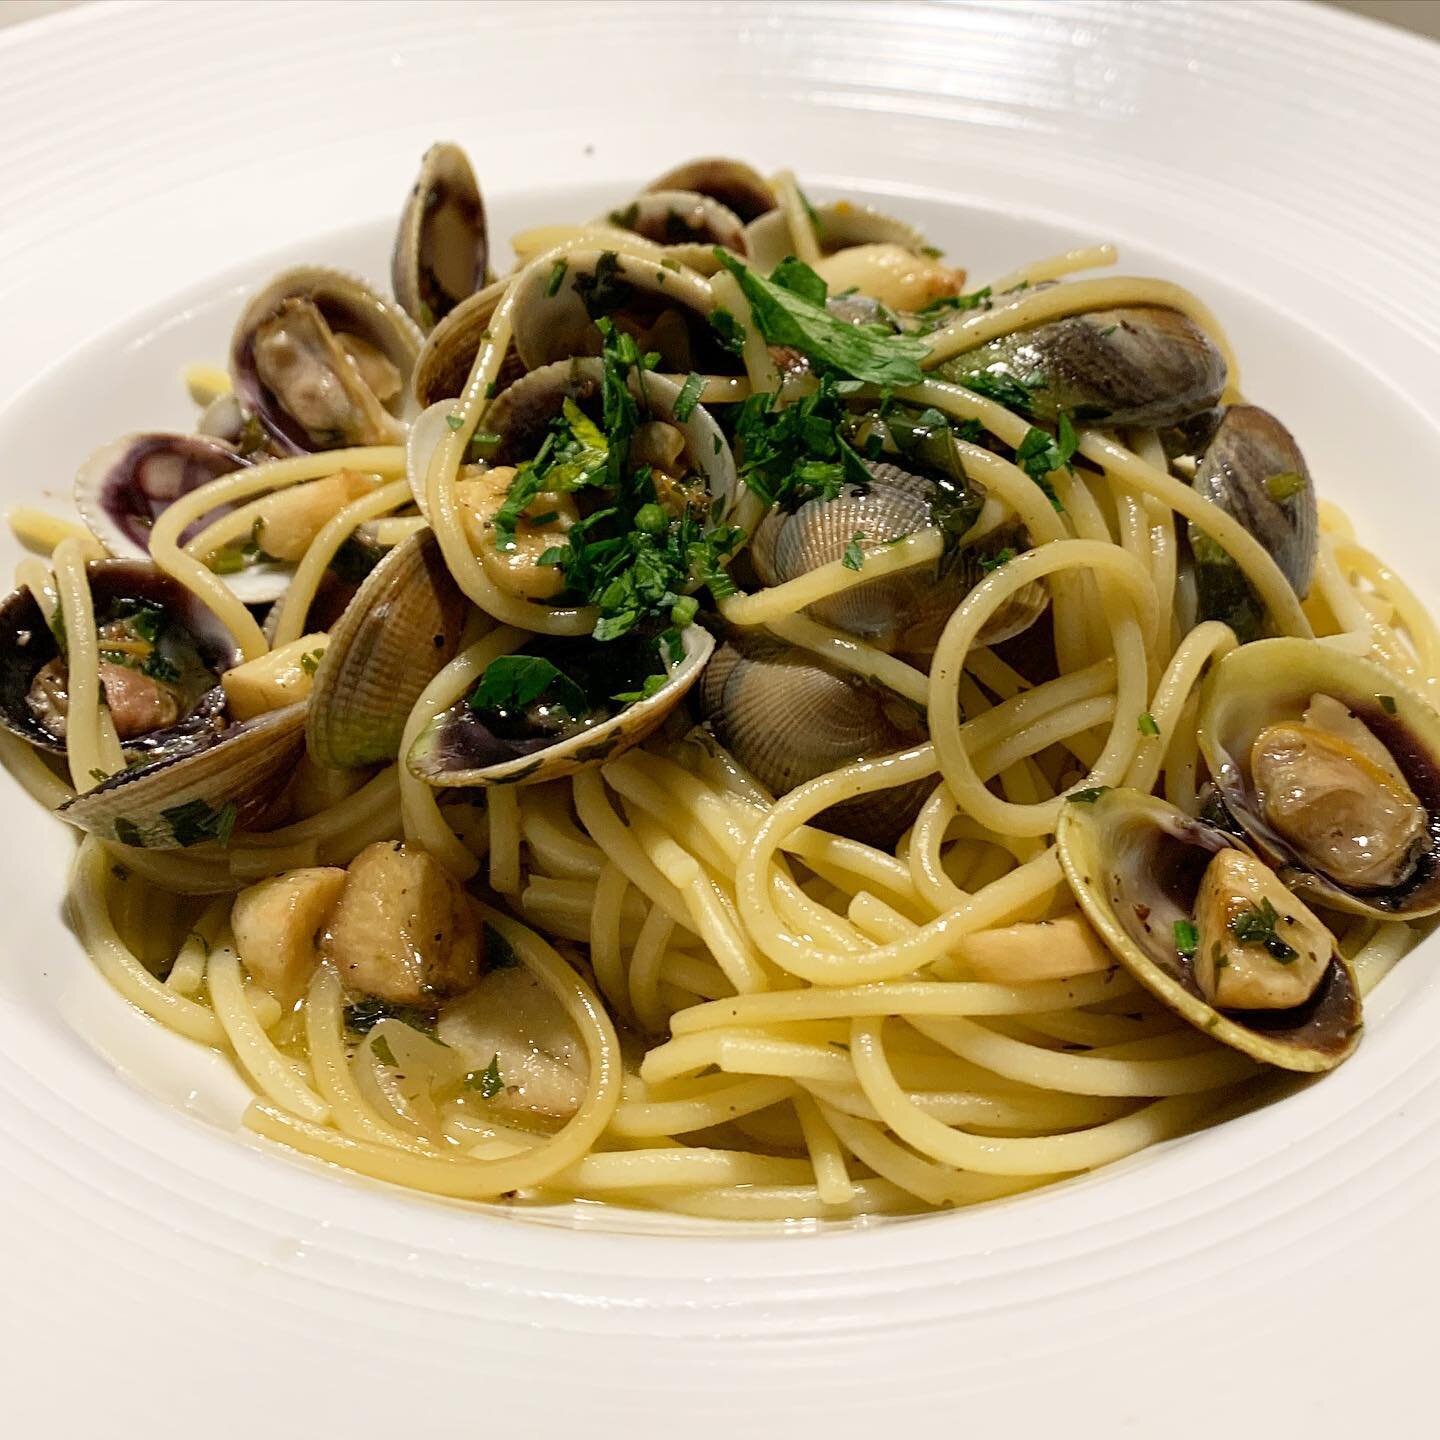 Spaghetti with clams anyone? 🍝🦪
.
.
.
#ColumbusParkTrattoria #203Local #StamfordDowntown #StamfordEats #CTBites